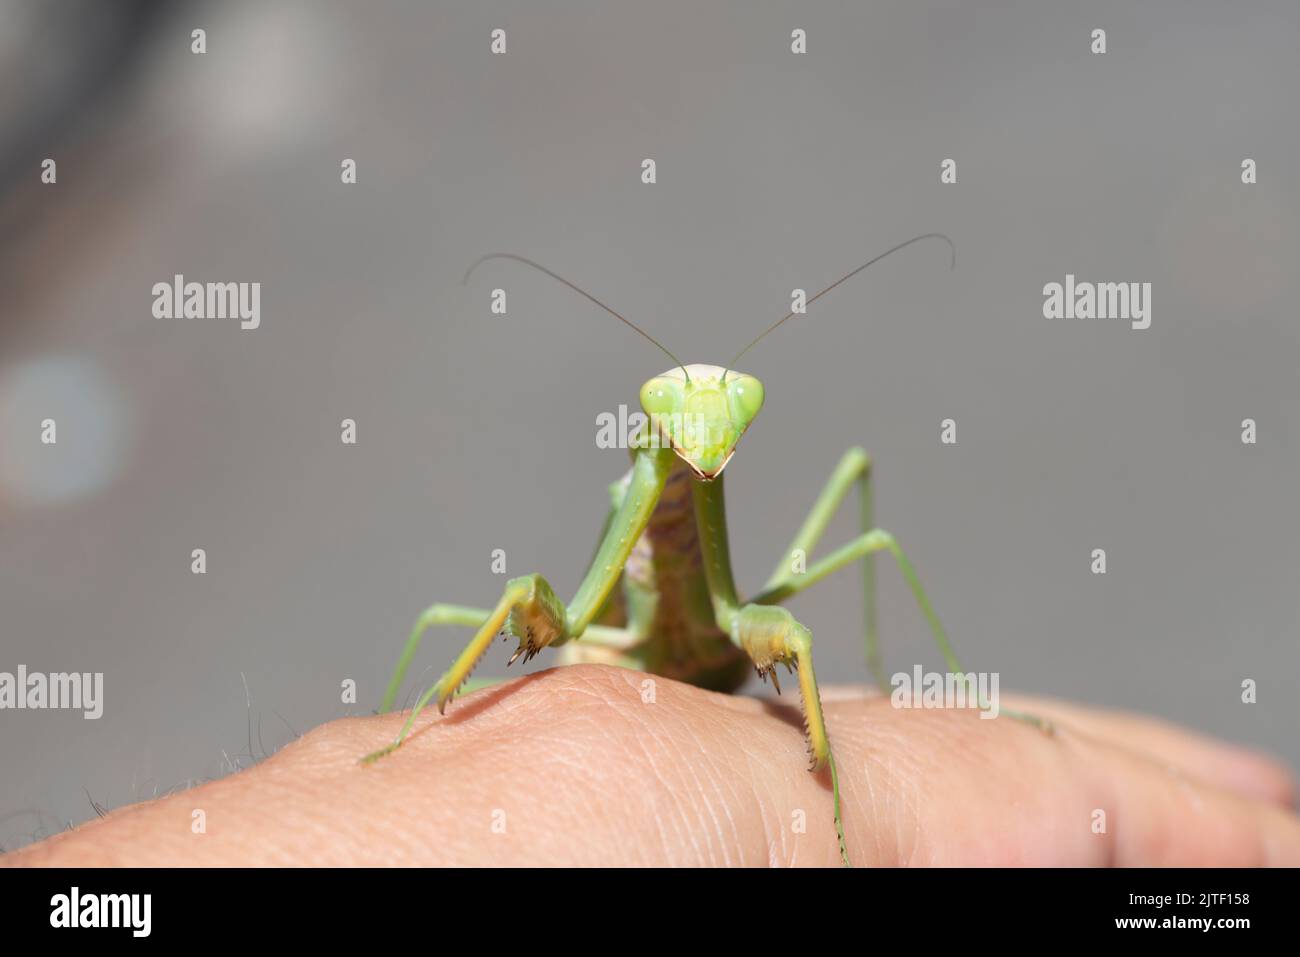 Italy, Lombardy, Praying Mantis on Hand Stock Photo